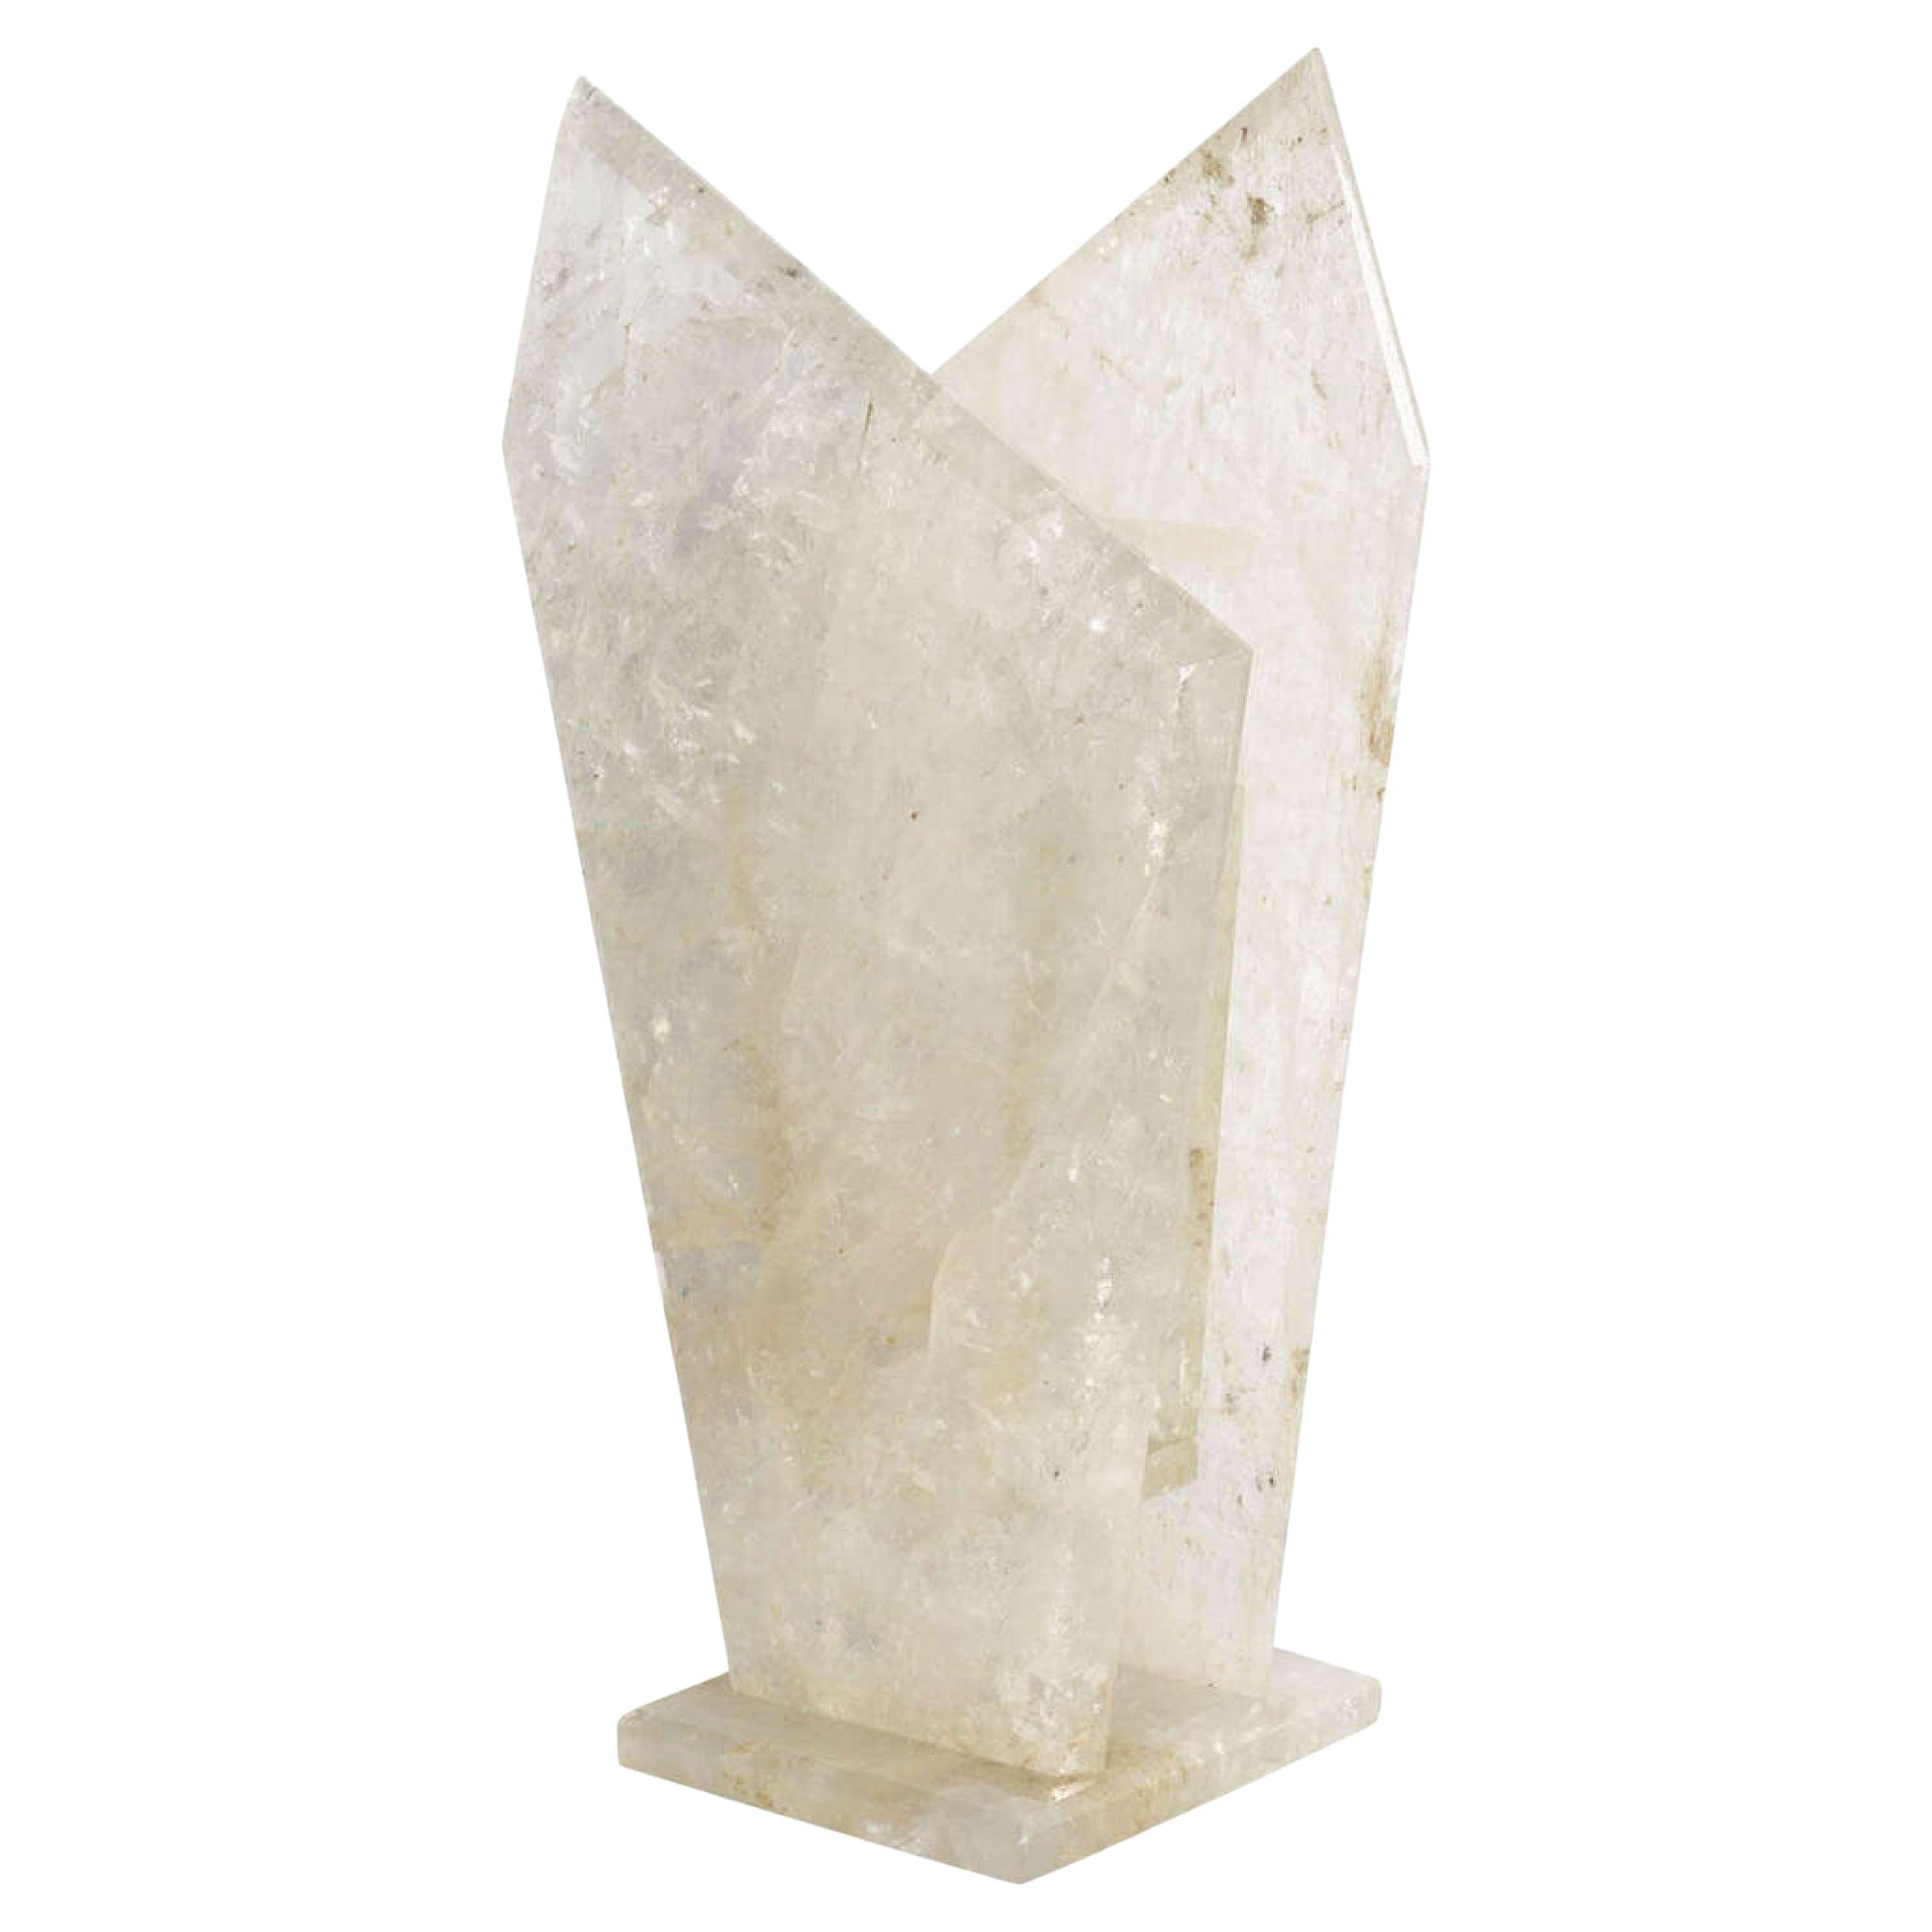 Grand vase américain contemporain en cristal de roche